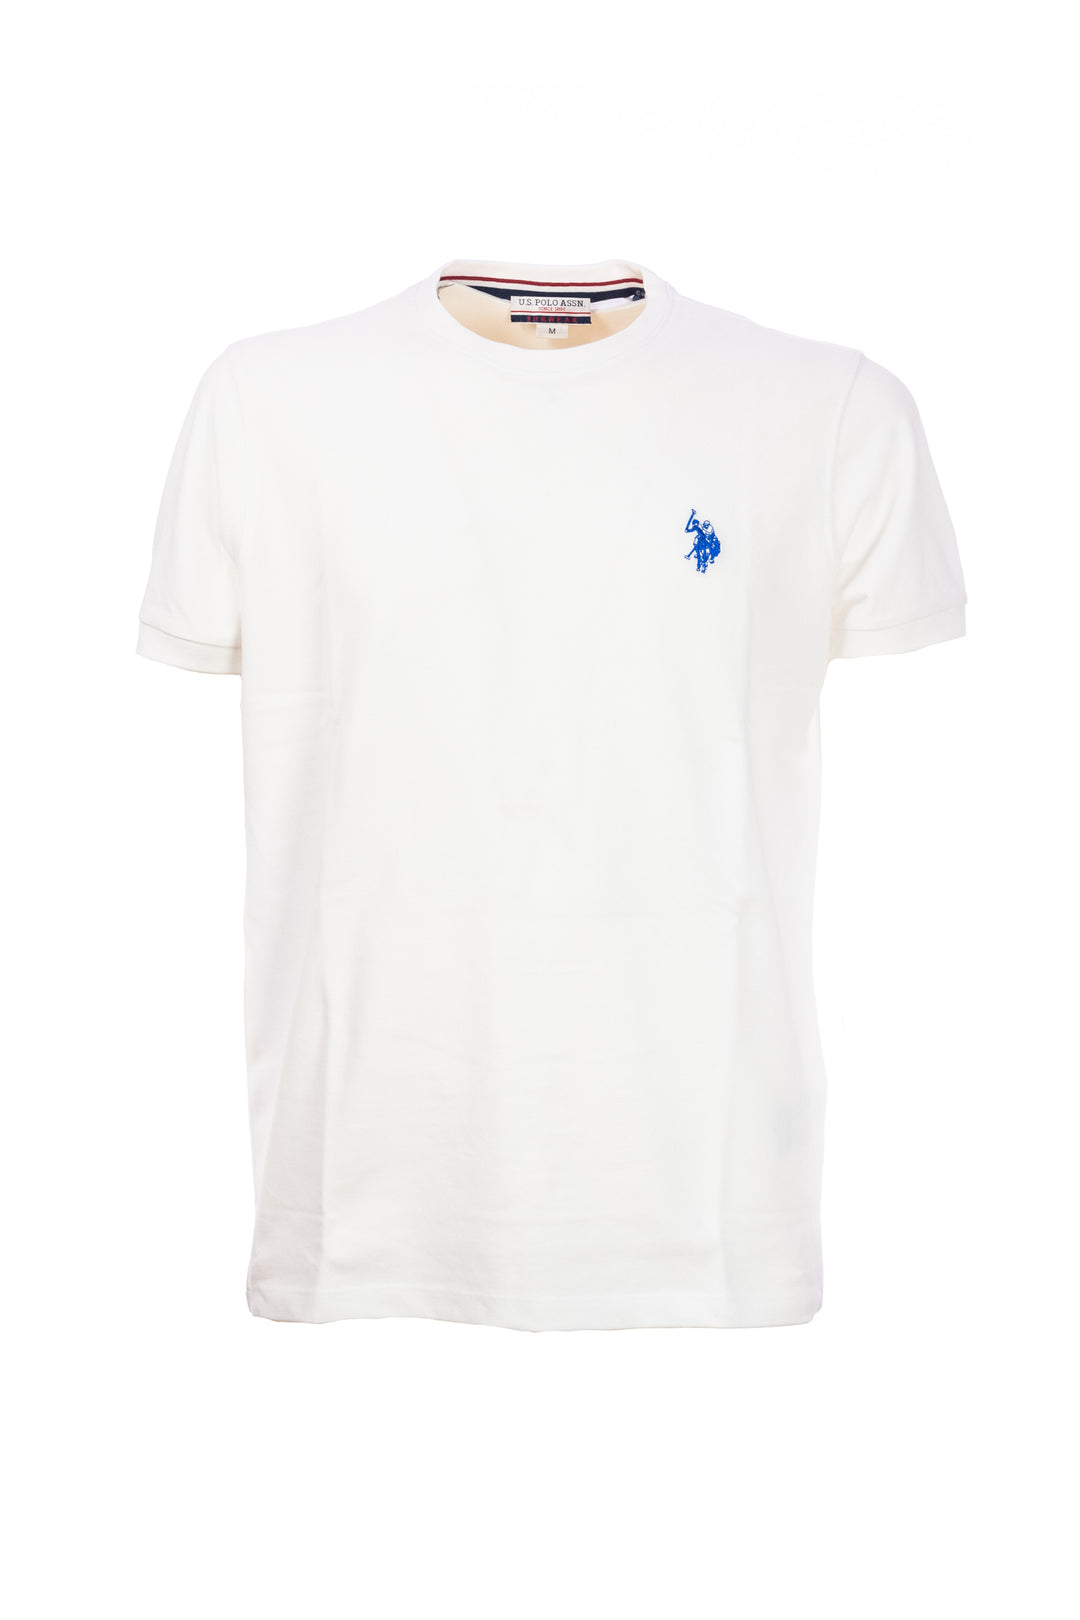 U.S. POLO ASSN. BEACHWEAR T-shirt bianca in cotone con logo ricamato - Mancinelli 1954